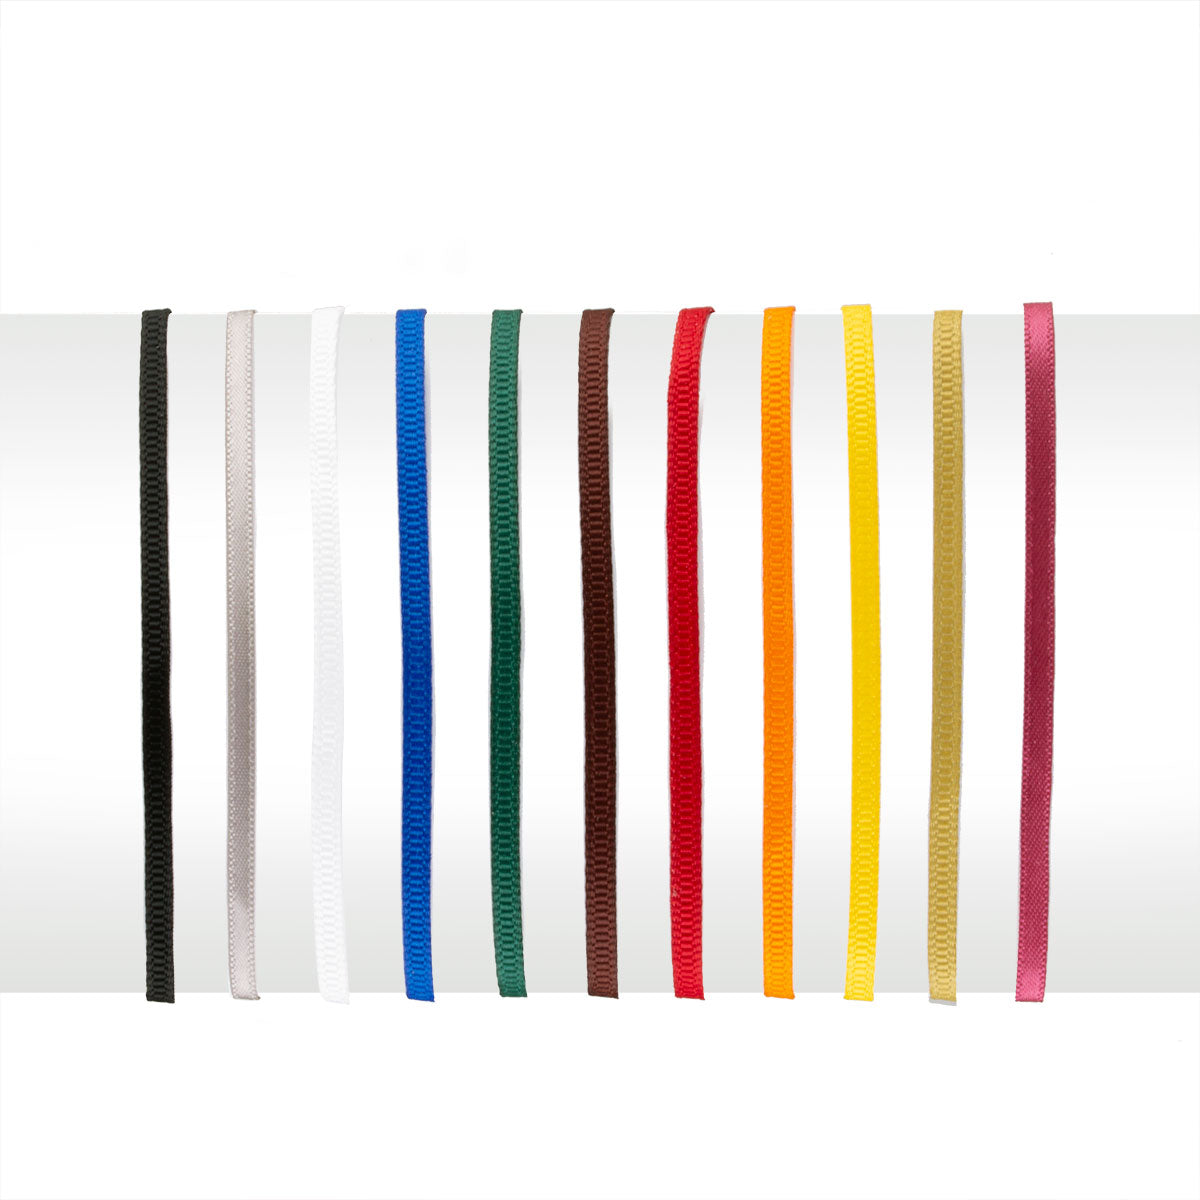 Bracelet ruban tissé toutes couleurs woven nylon strap all colors